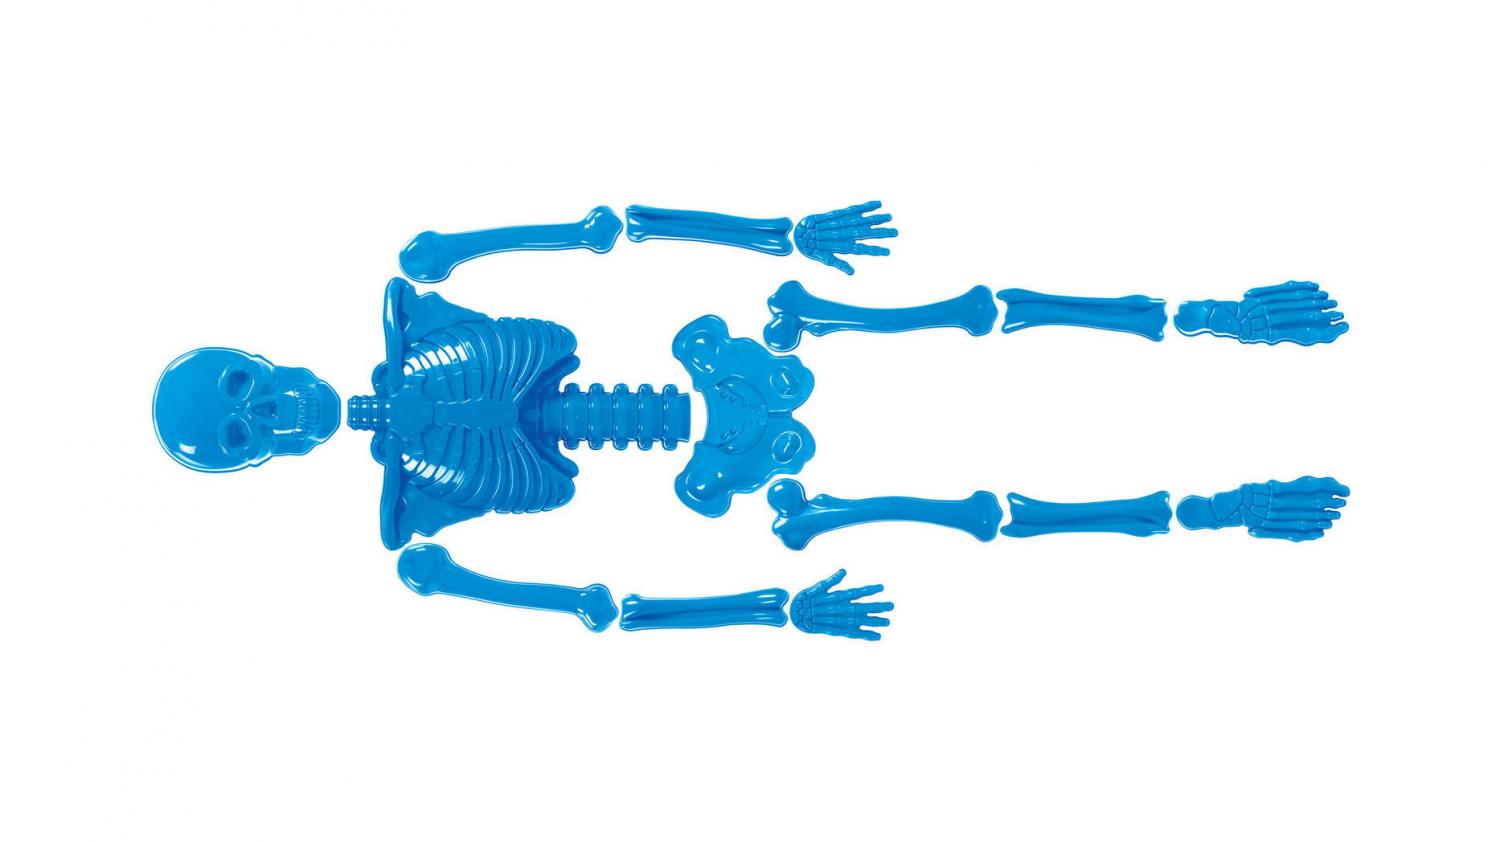 Bag O Bones Beach Skeleton - Plastic beach molds toy let you create human skeleton in sand